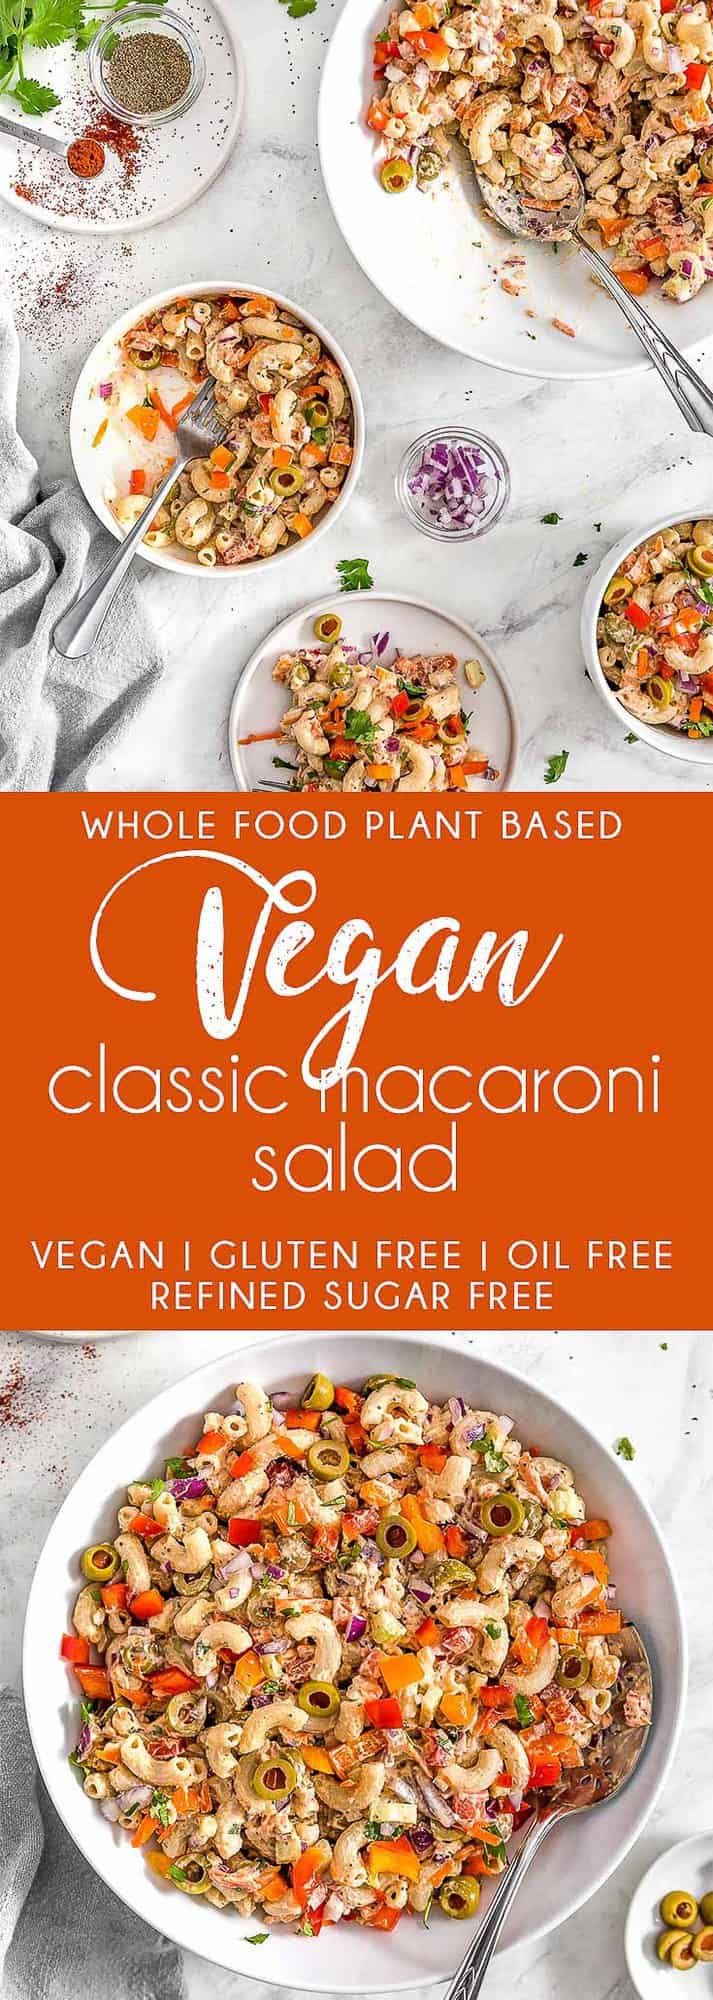 Vegan Classic Macaroni Salad, macaroni salad, pasta, vegan pasta salad, vegan macaroni salad, plant based, vegan, vegetarian, whole food plant based, gluten free, recipe, wfpb, healthy, healthy vegan, oil free, no refined sugar, no oil, refined sugar free, dairy free, holiday, easy recipe, fast recipe, sides, picnic, summer recipe, picnic recipe